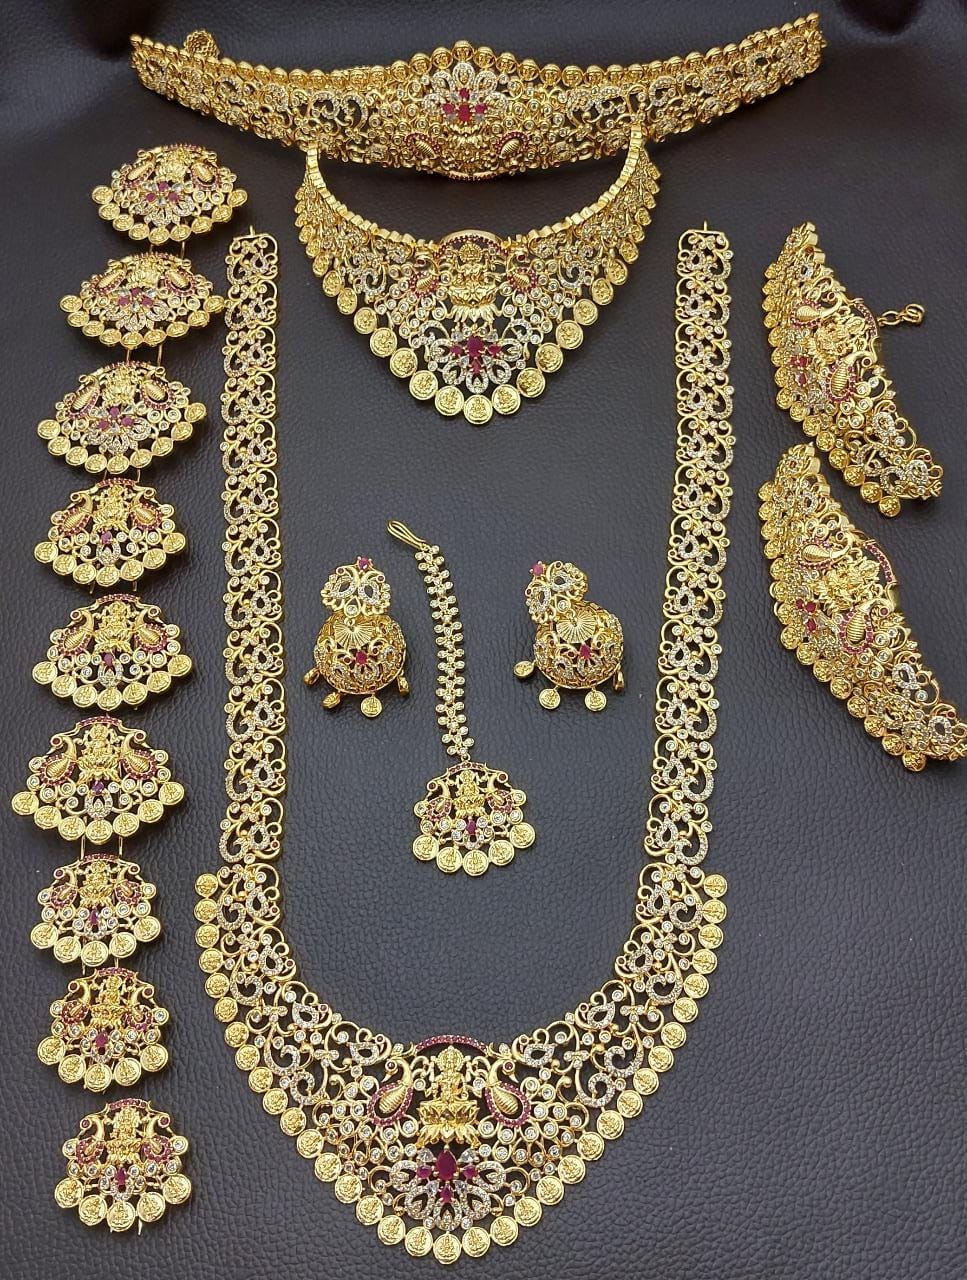 Premium quality Temple Jewelry CZ Stone Bridal Set Haram Necklace Set with Earrings Lakshmi Coin Design